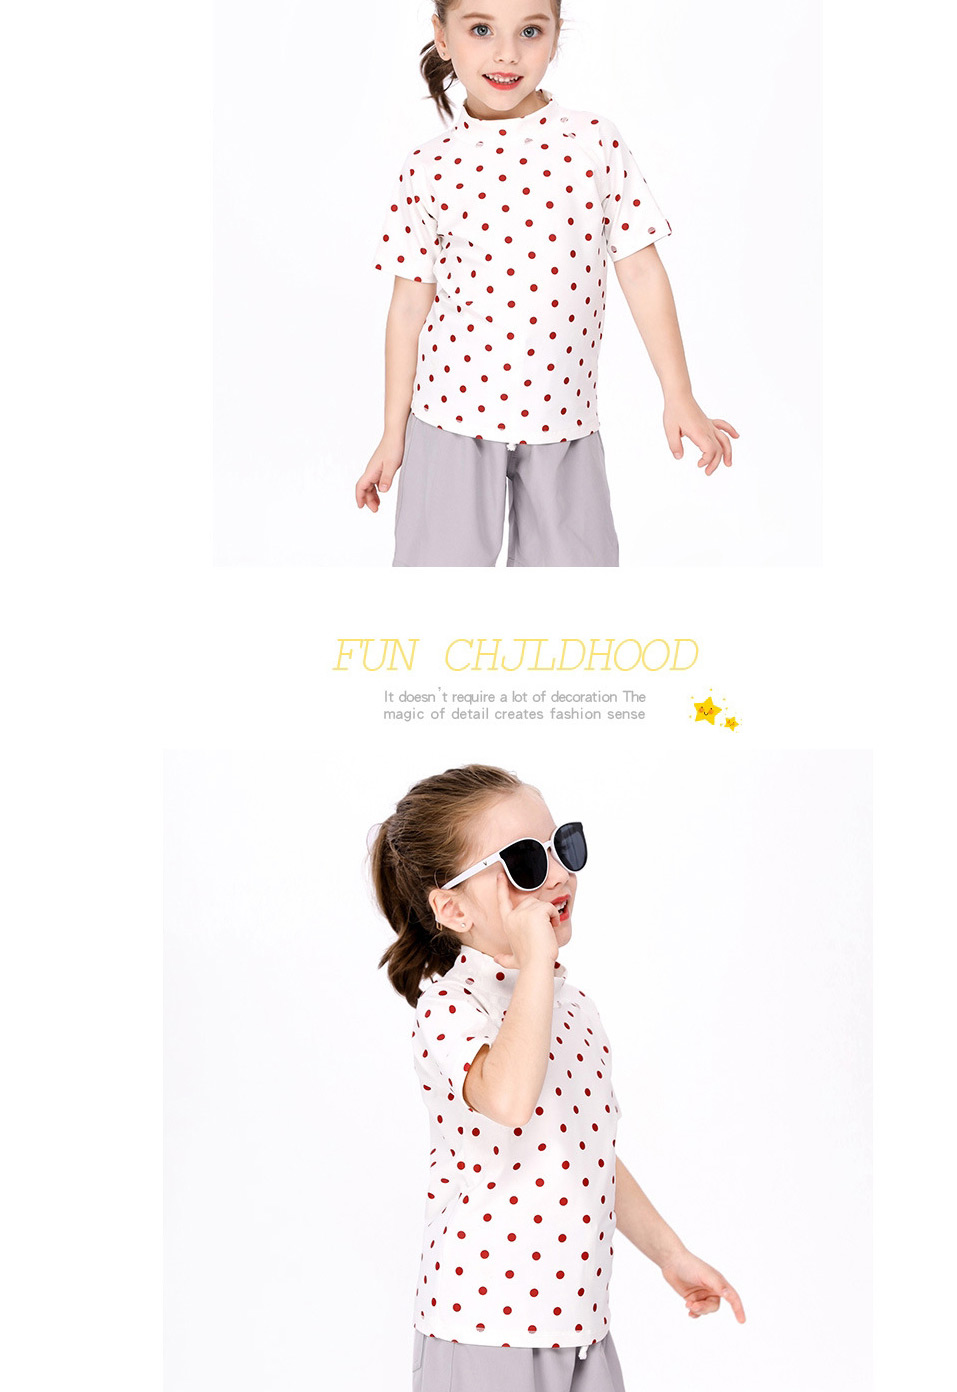 Fashion Pineapple Childrens Short-sleeved Top Swimsuit,Kids Swimwear